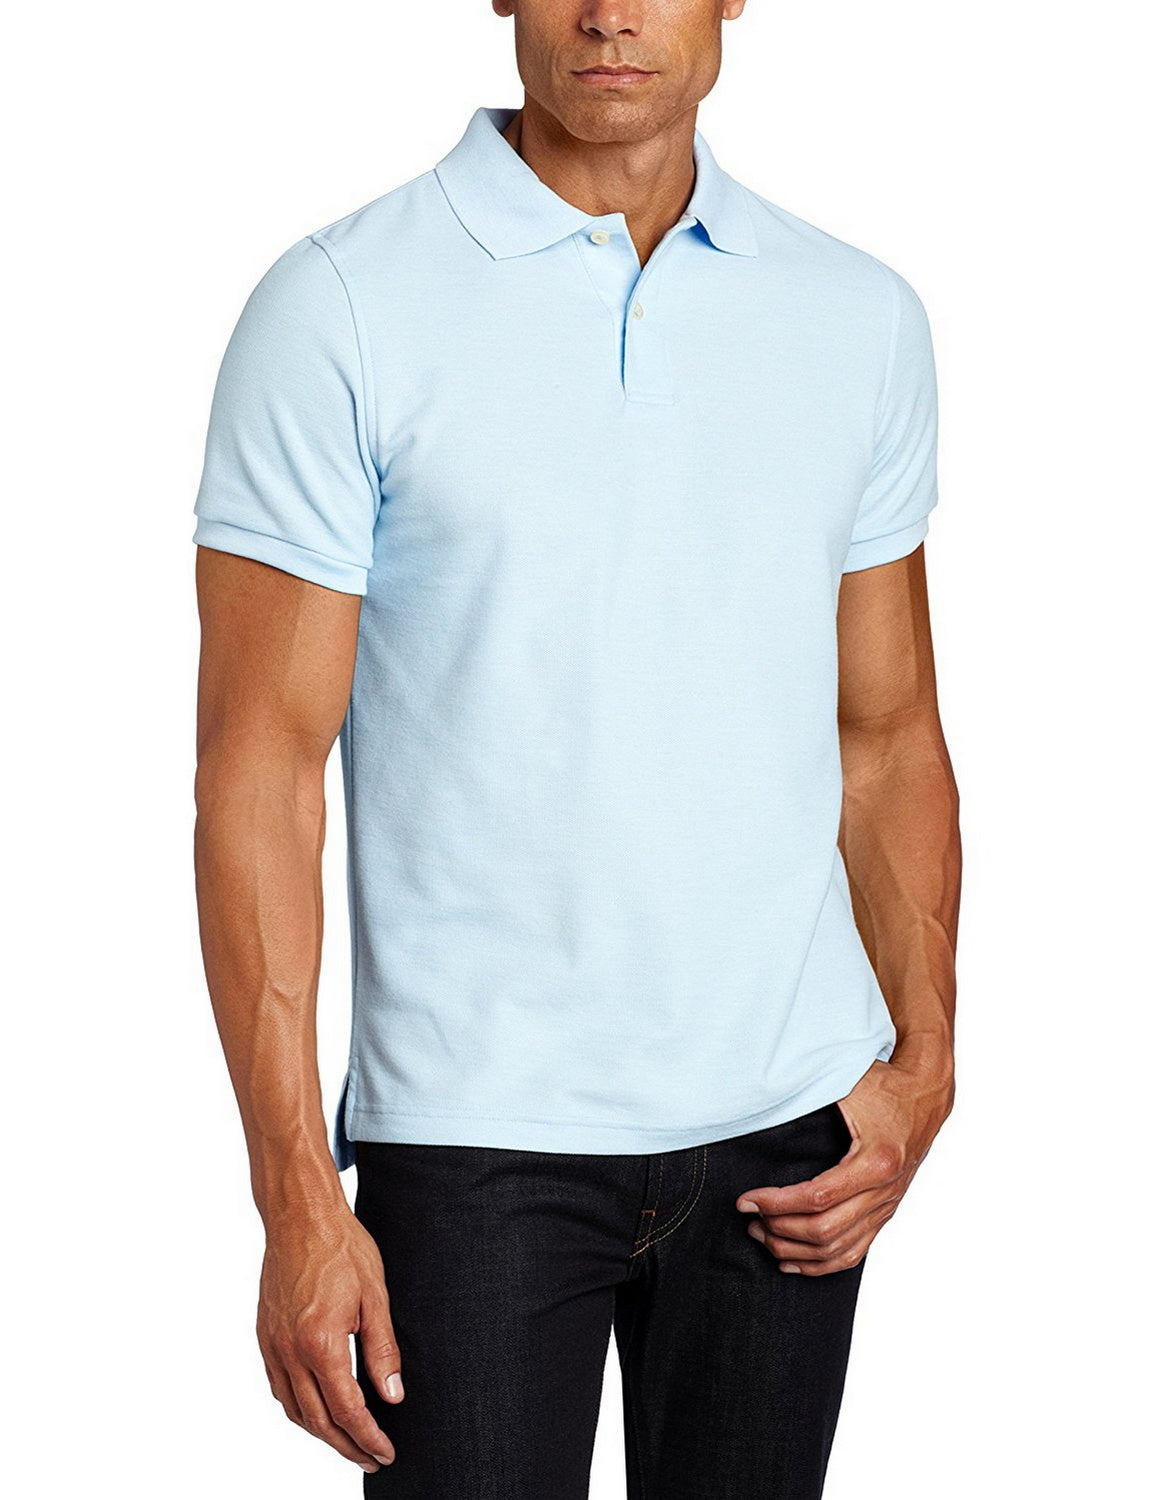 Lee Uniforms Men's Modern Fit Short Sleeve Polo Shirt – The